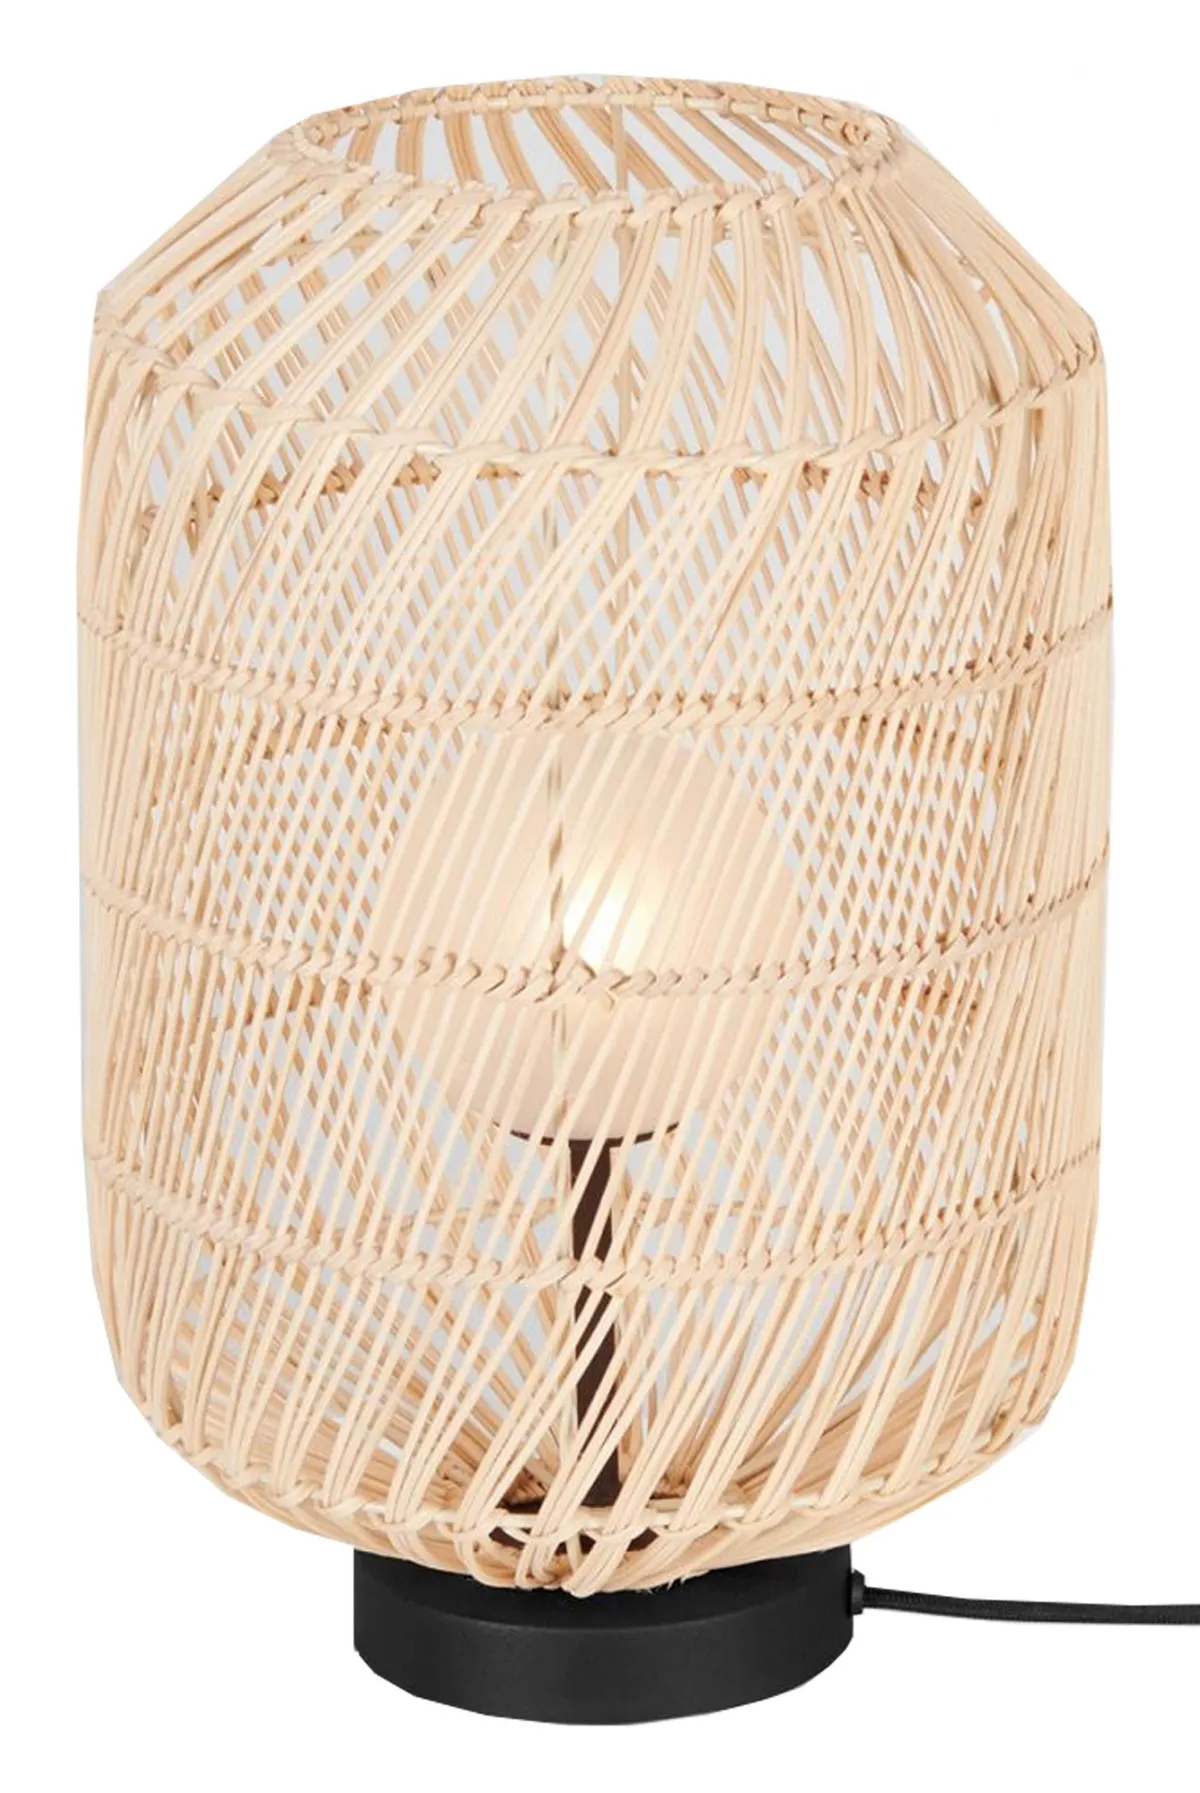 Java rattan table lamp, £69, Made.com